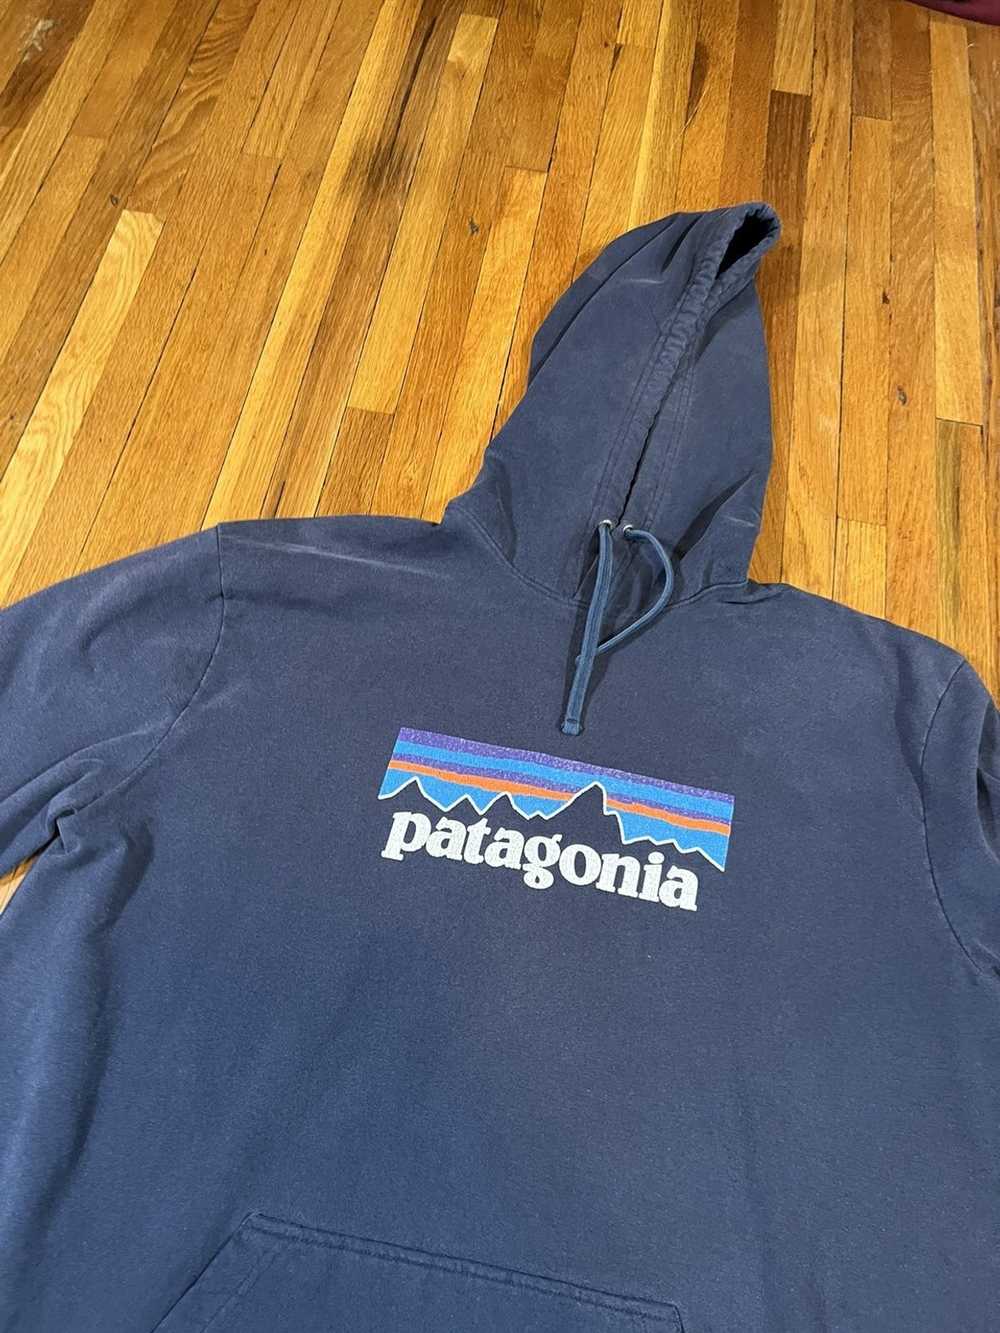 Patagonia Patagonia Hoodie - image 4